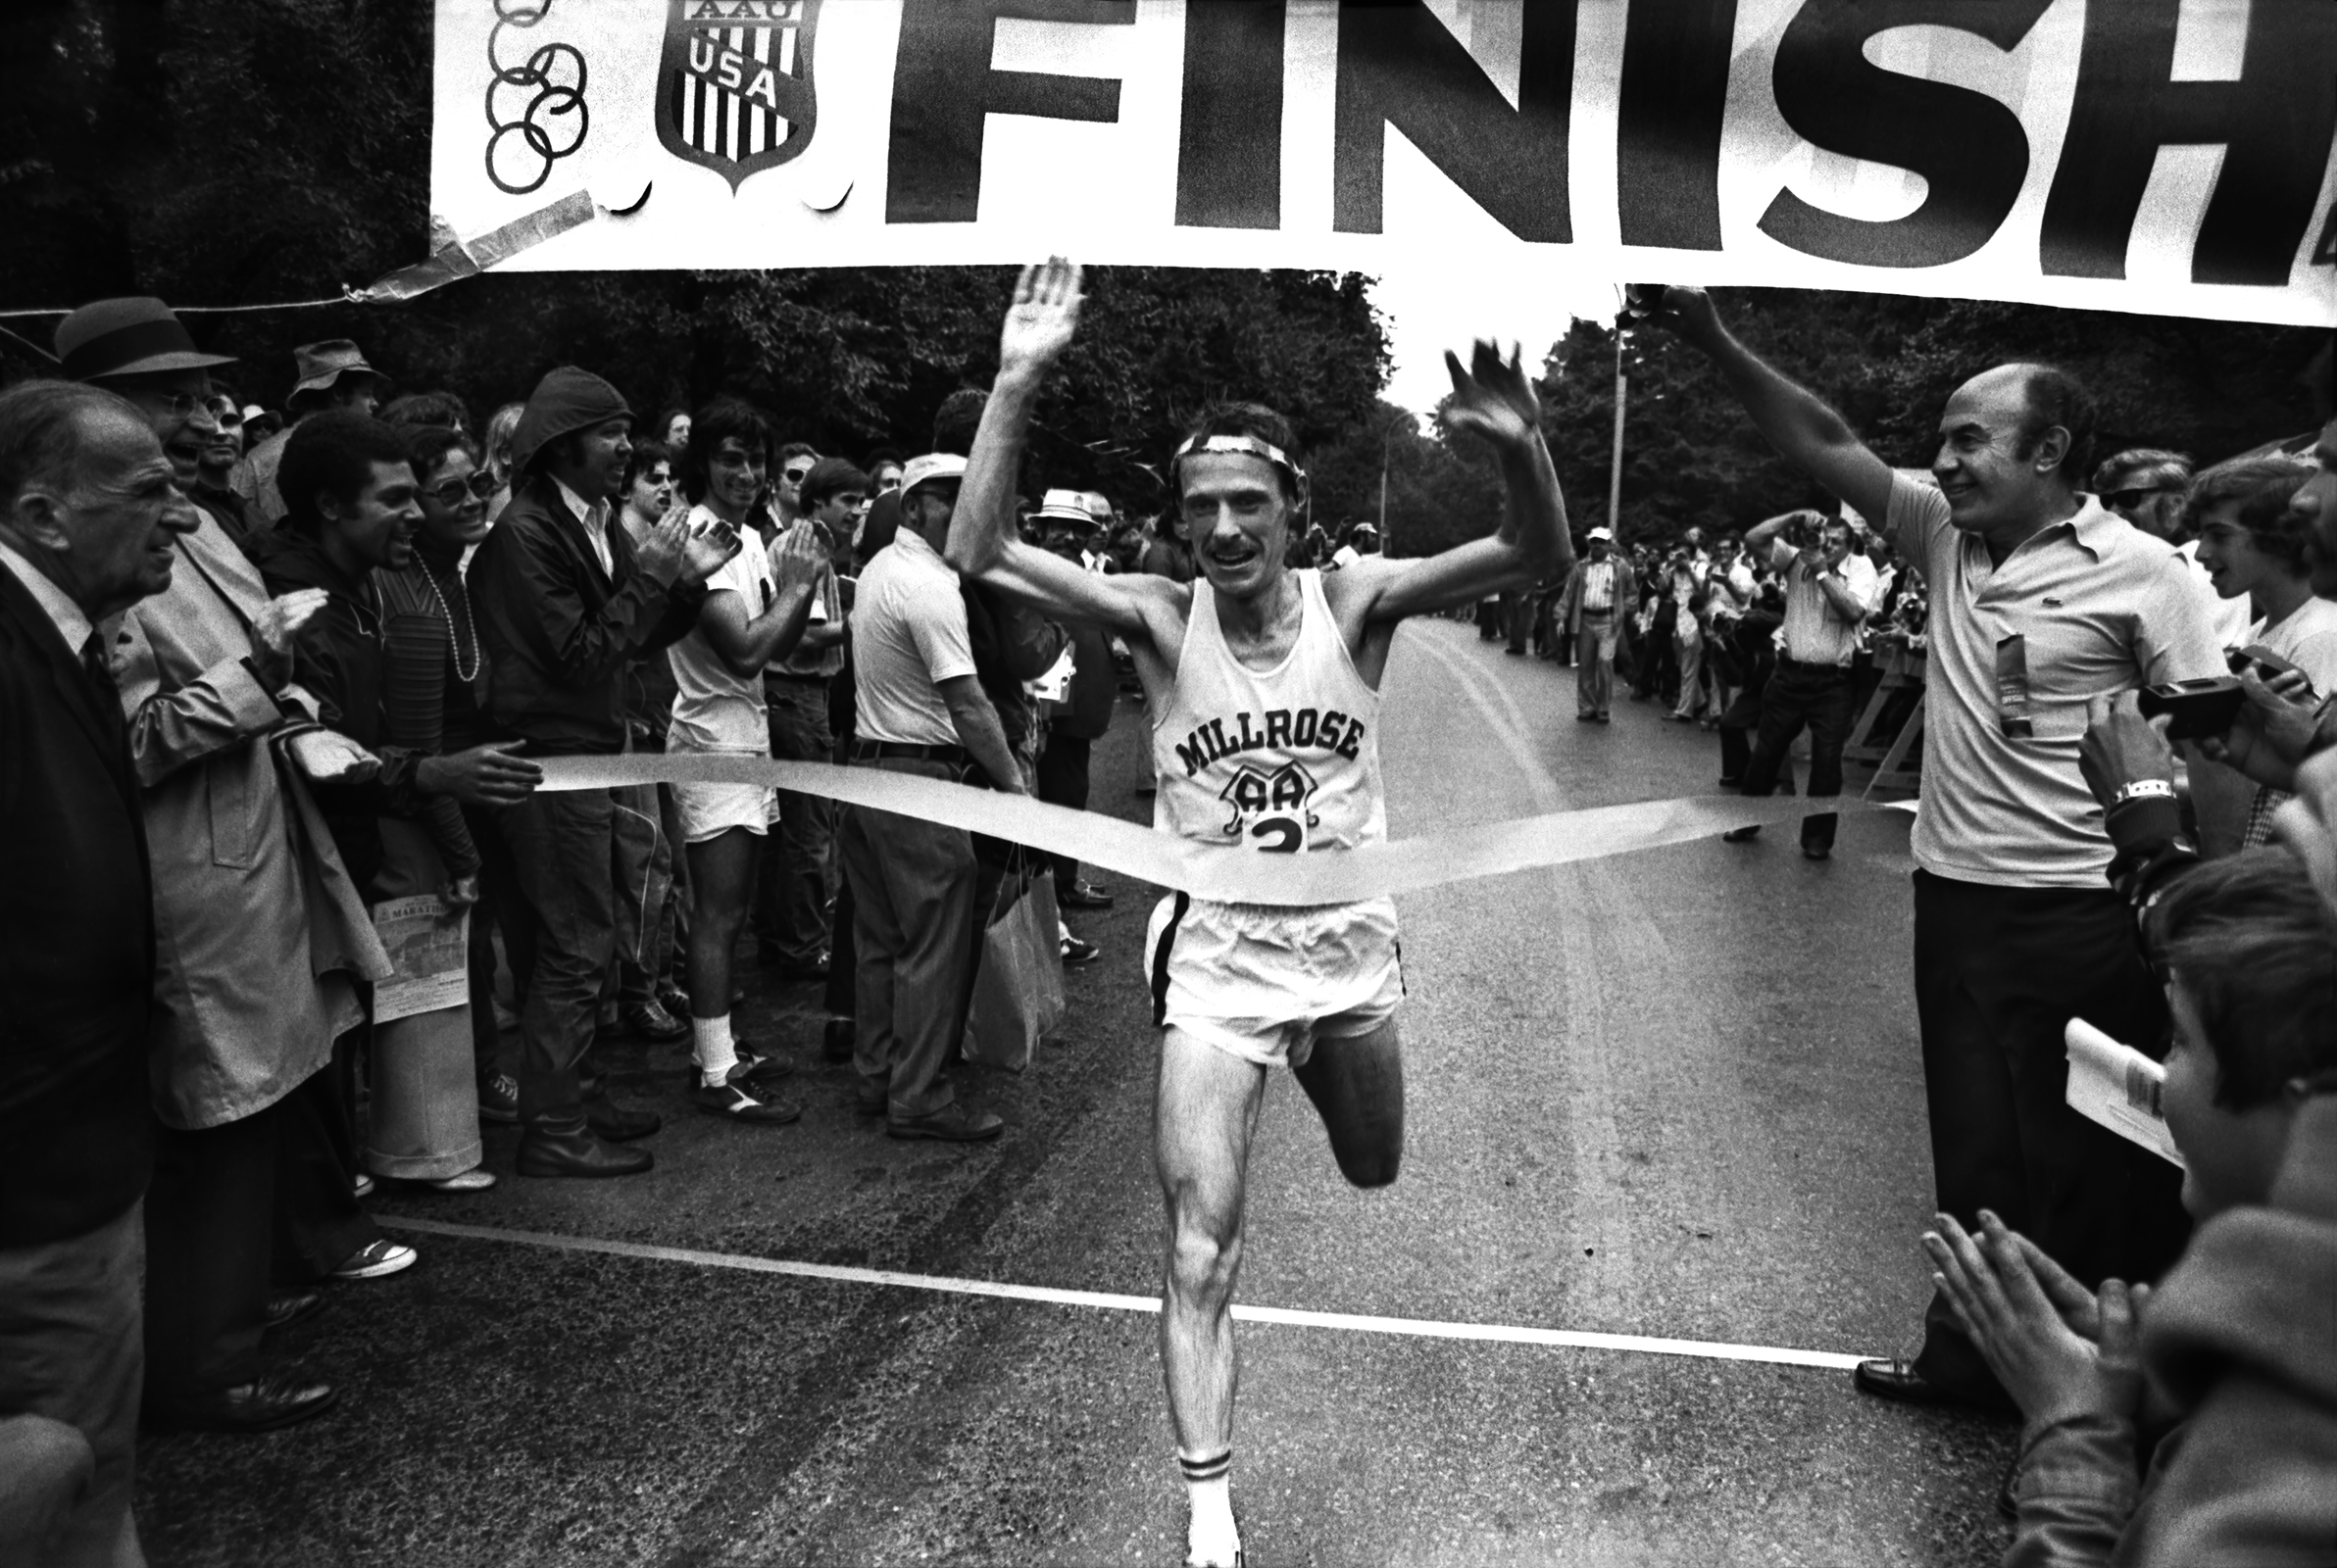 norbert sander winning the NYC marathon, 1974